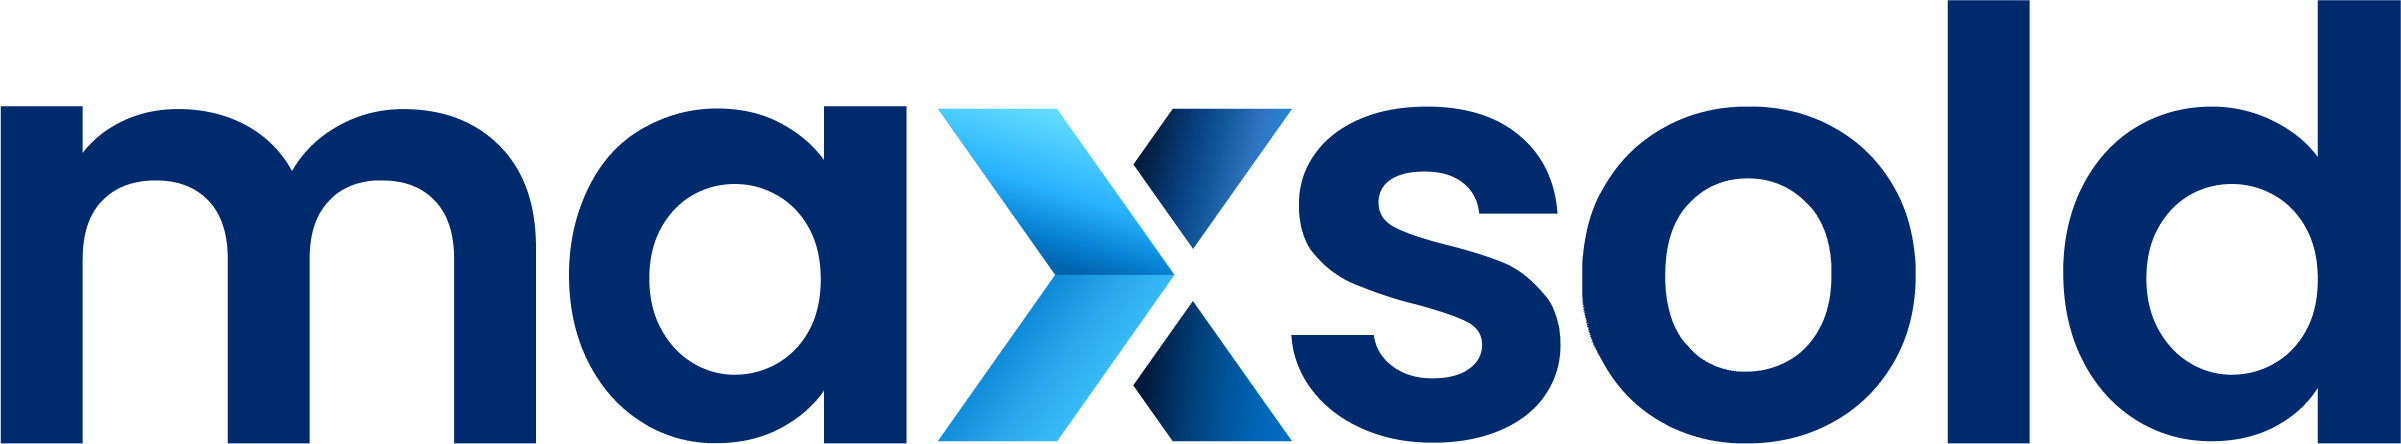 maxsold logo